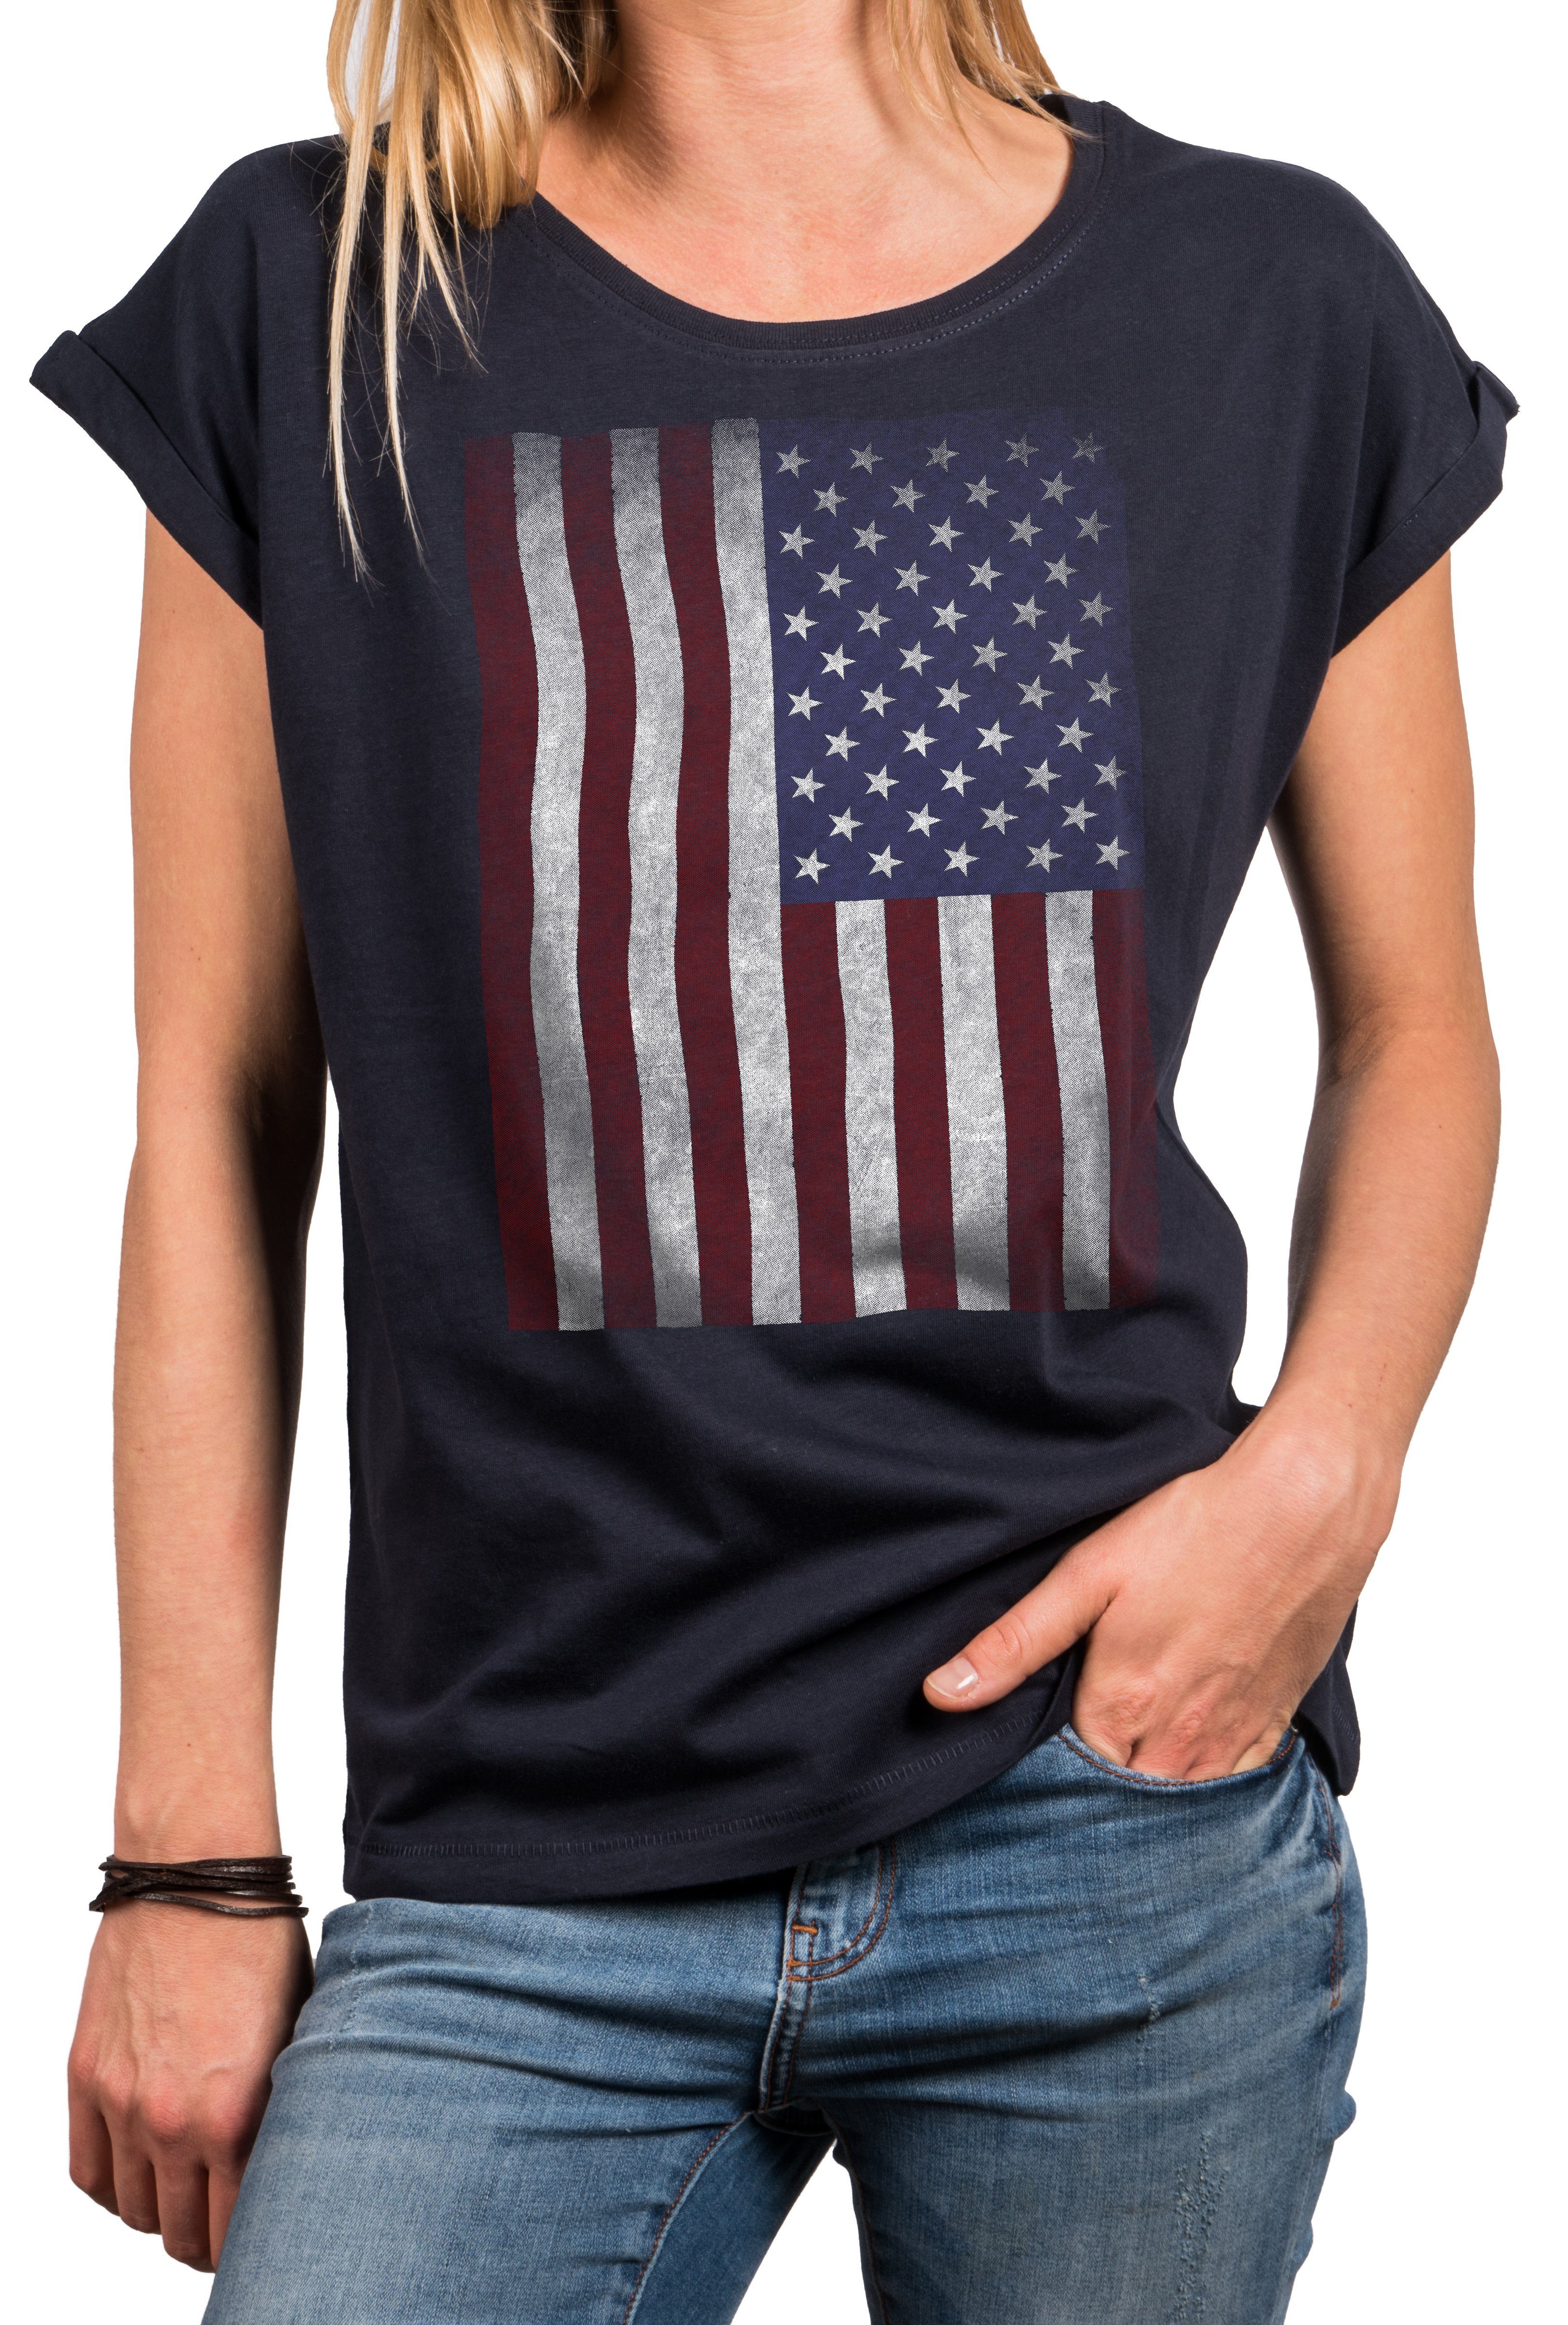 MAKAYA Print-Shirt Fahne Oberteile schwarz, USA Sommer grau, Vintage Amerika Flagge (Kurzarm, Top Tunika Damen Baumwolle, Größen große blau)